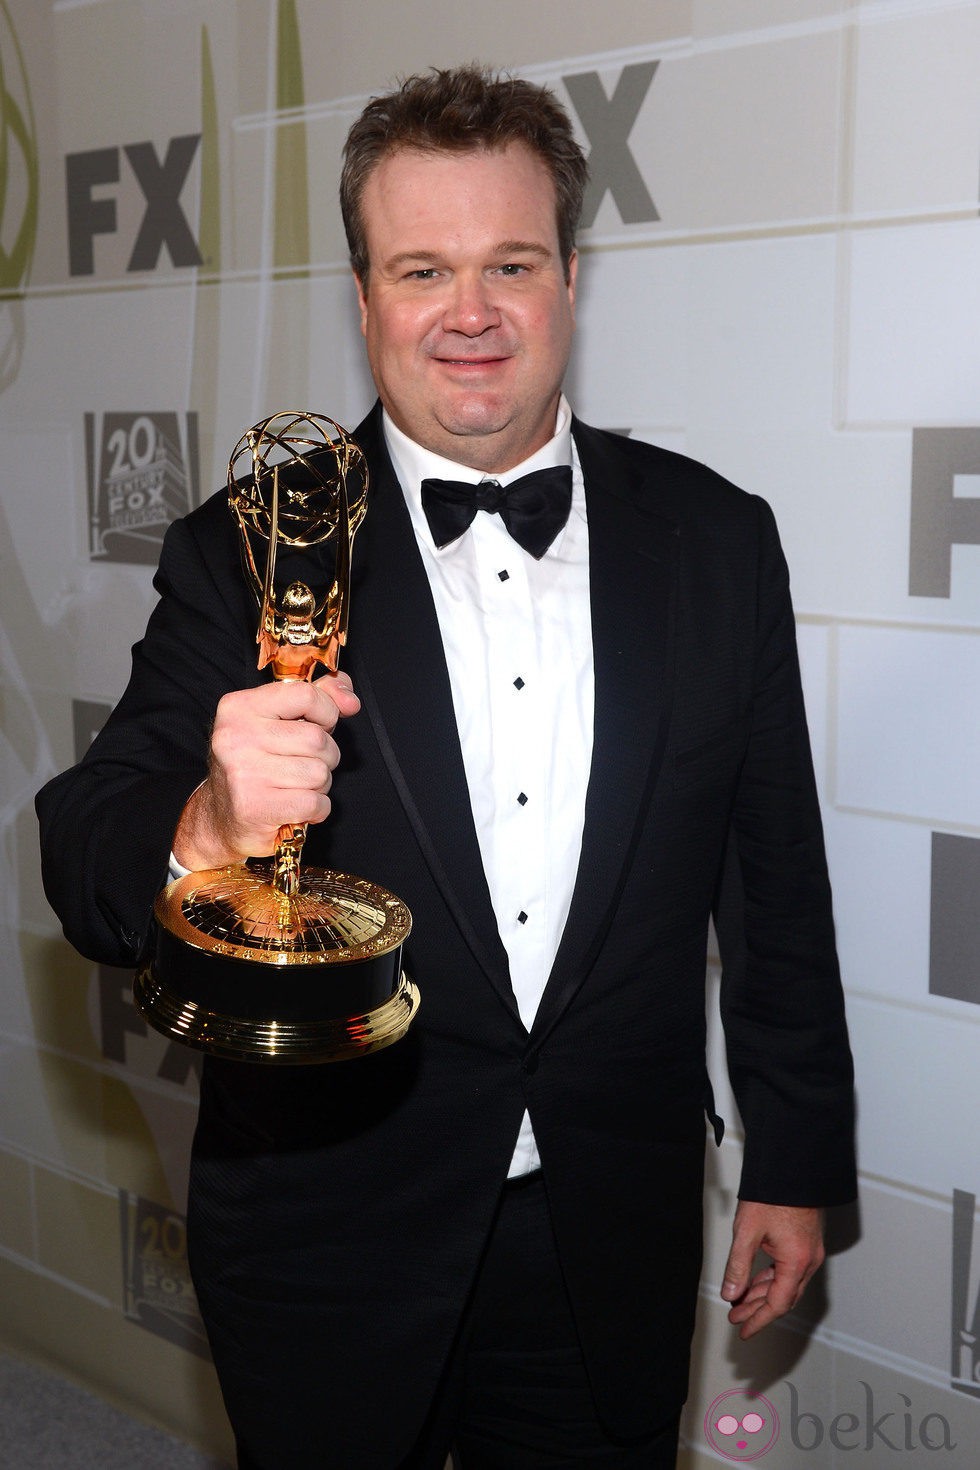 Eric Stonestreet posa con su Emmy 2012 en la fiesta celebrada por Fox